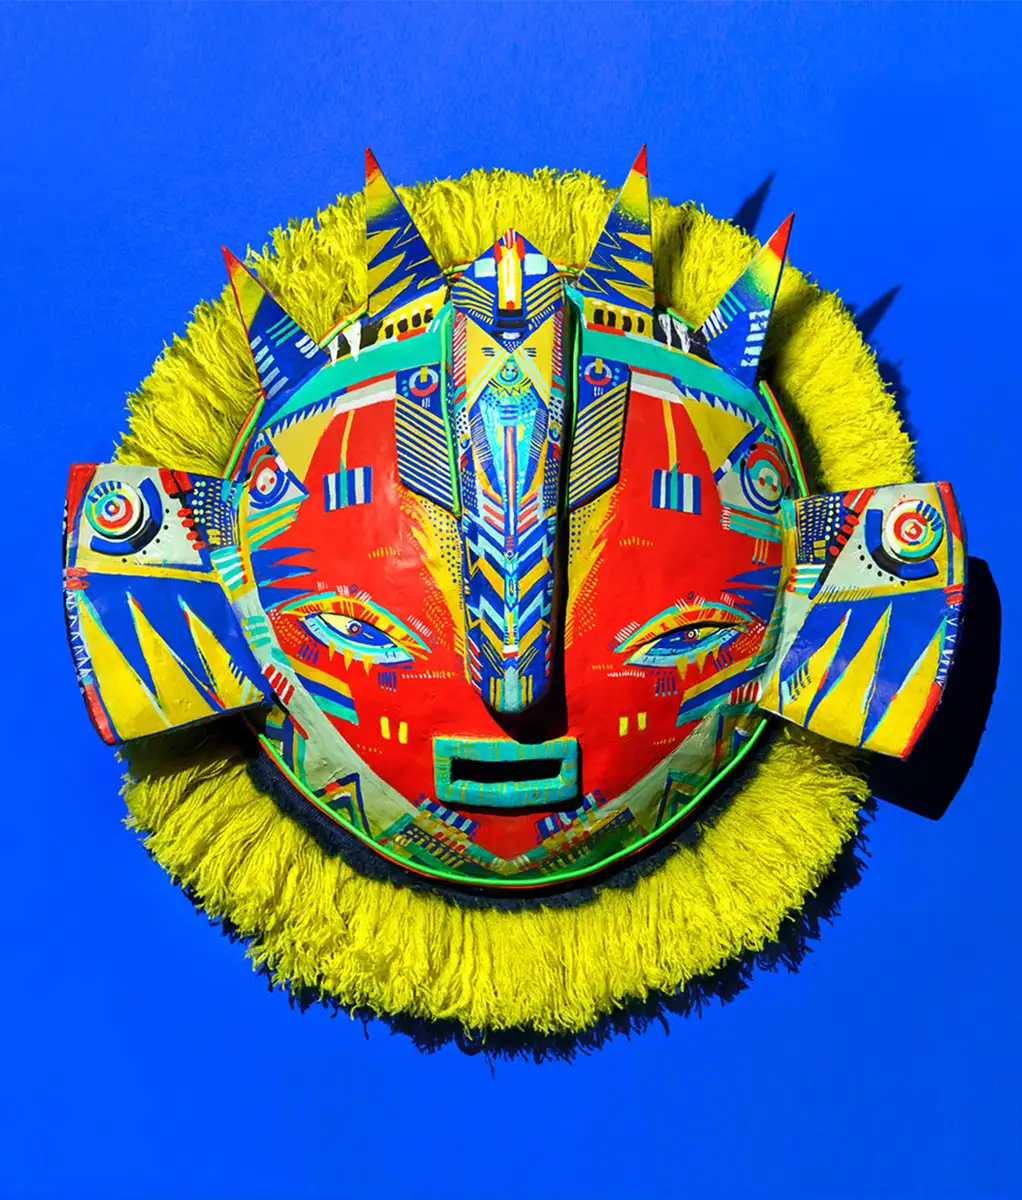 Bridging Worlds: How Jumu Monster Transforms Indigenous Heritage into Contemporary Art